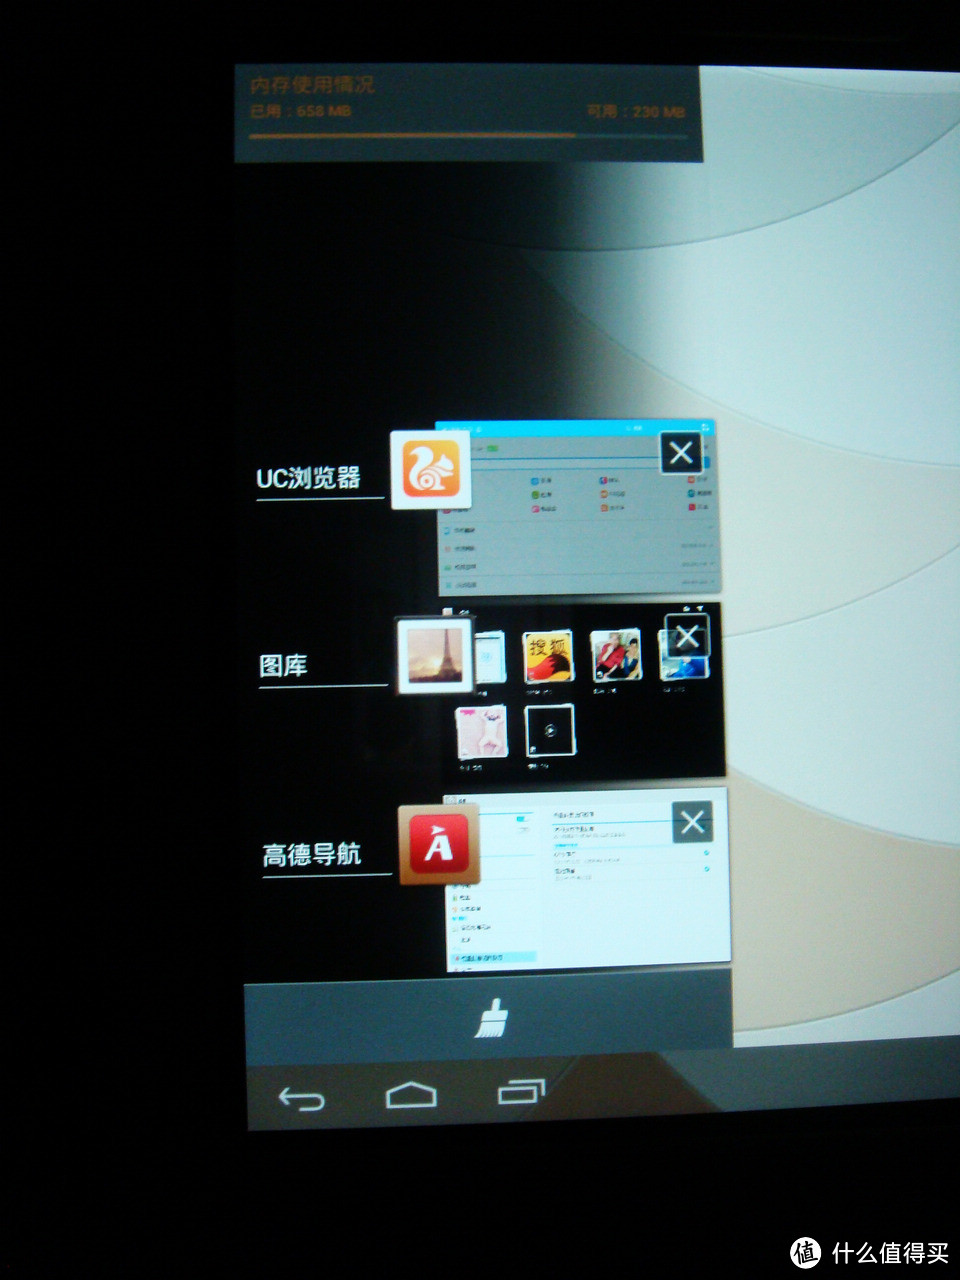 HUAWEI 华为 MediaPad 10Link+ 平板电脑